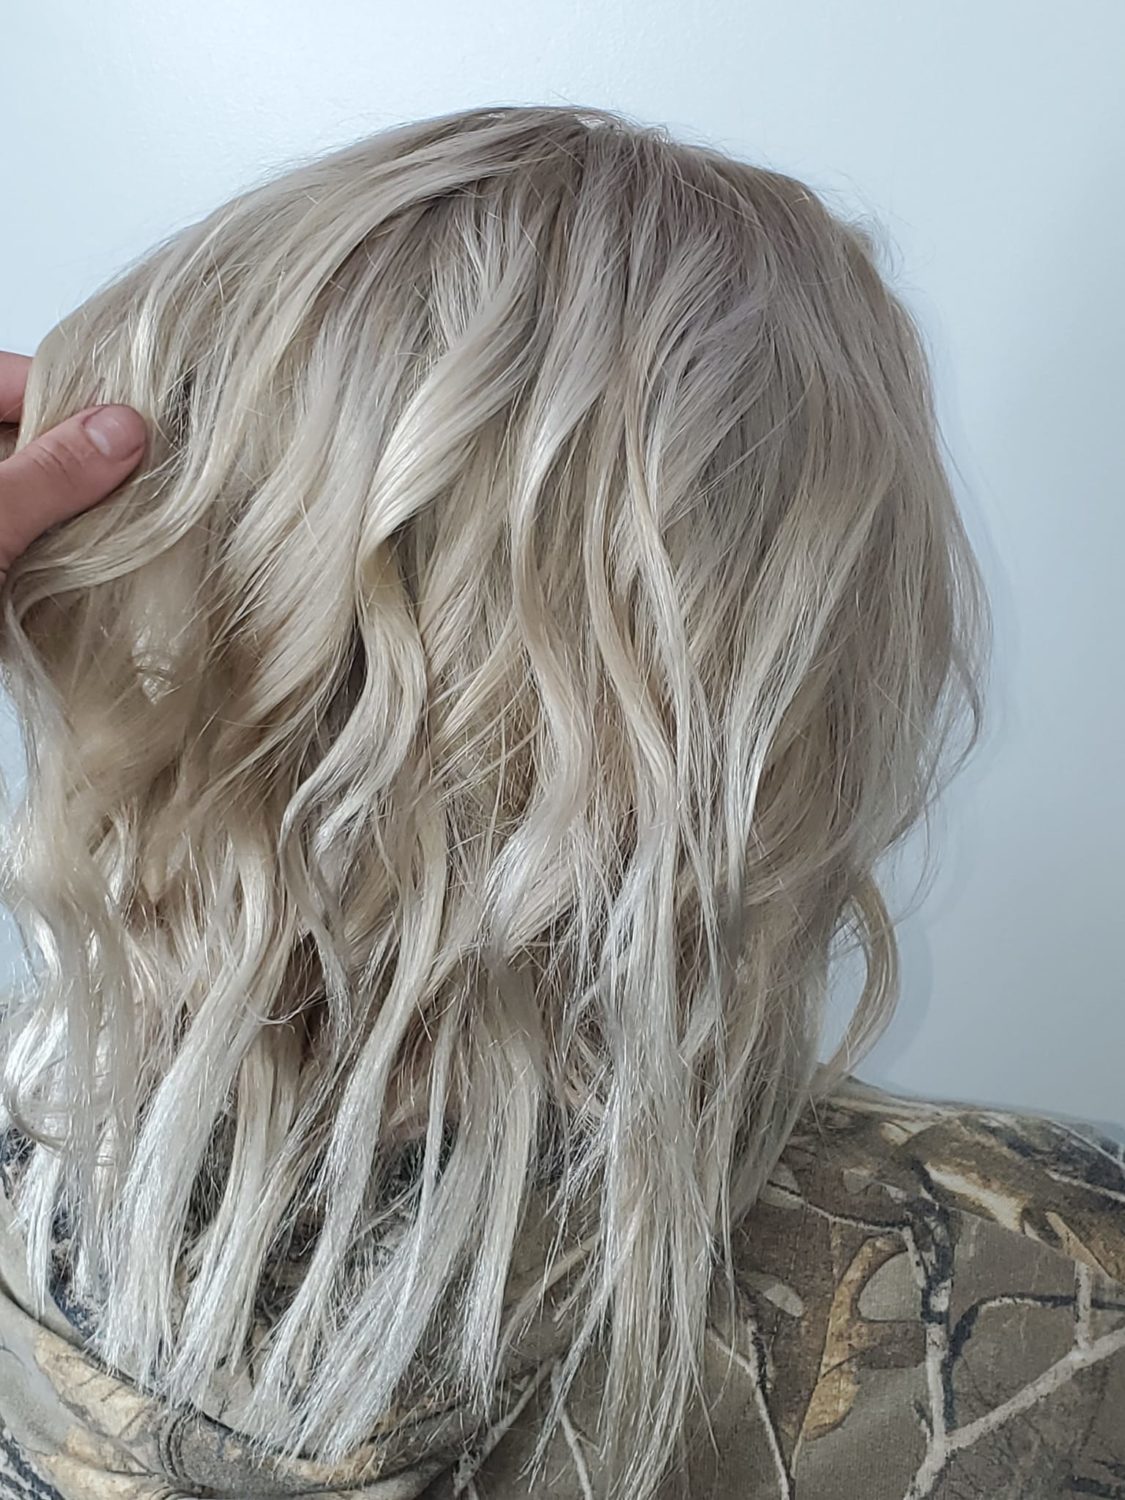 Brassy Blonde Hair: Why it Happens & How to Fix it – Milkshake USA